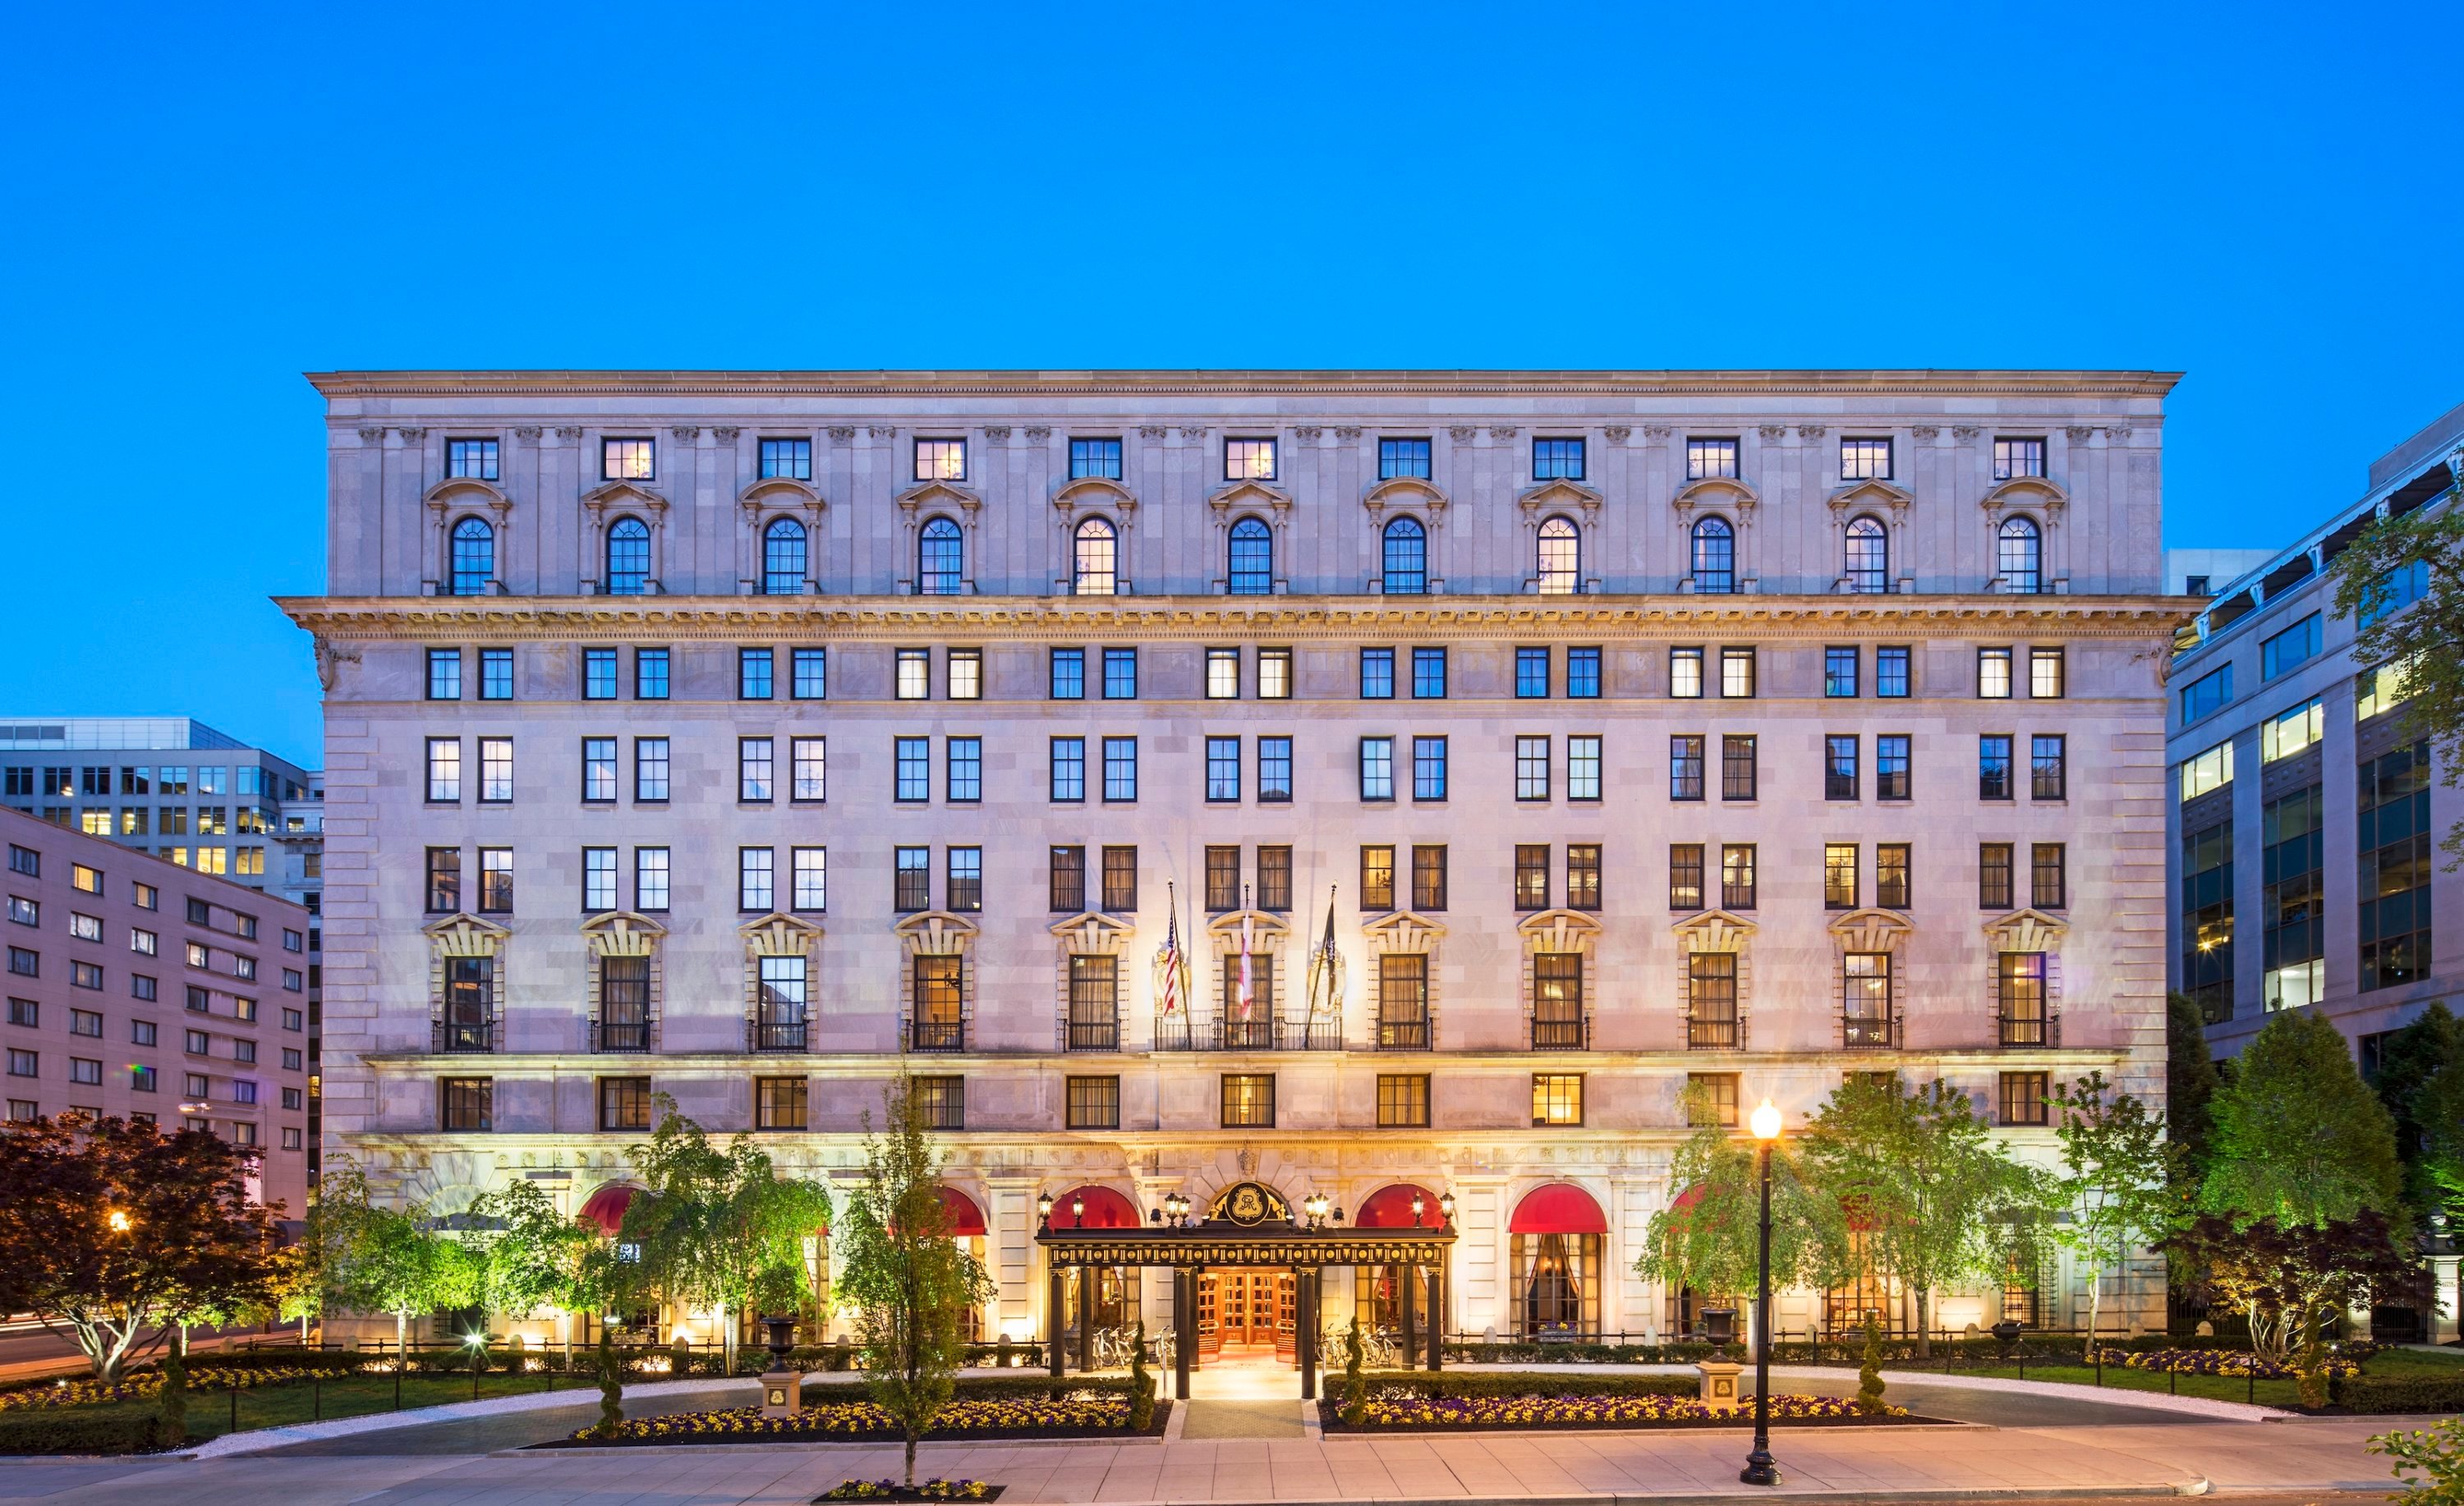 Best Hotels in Washington, DC the St. Regis